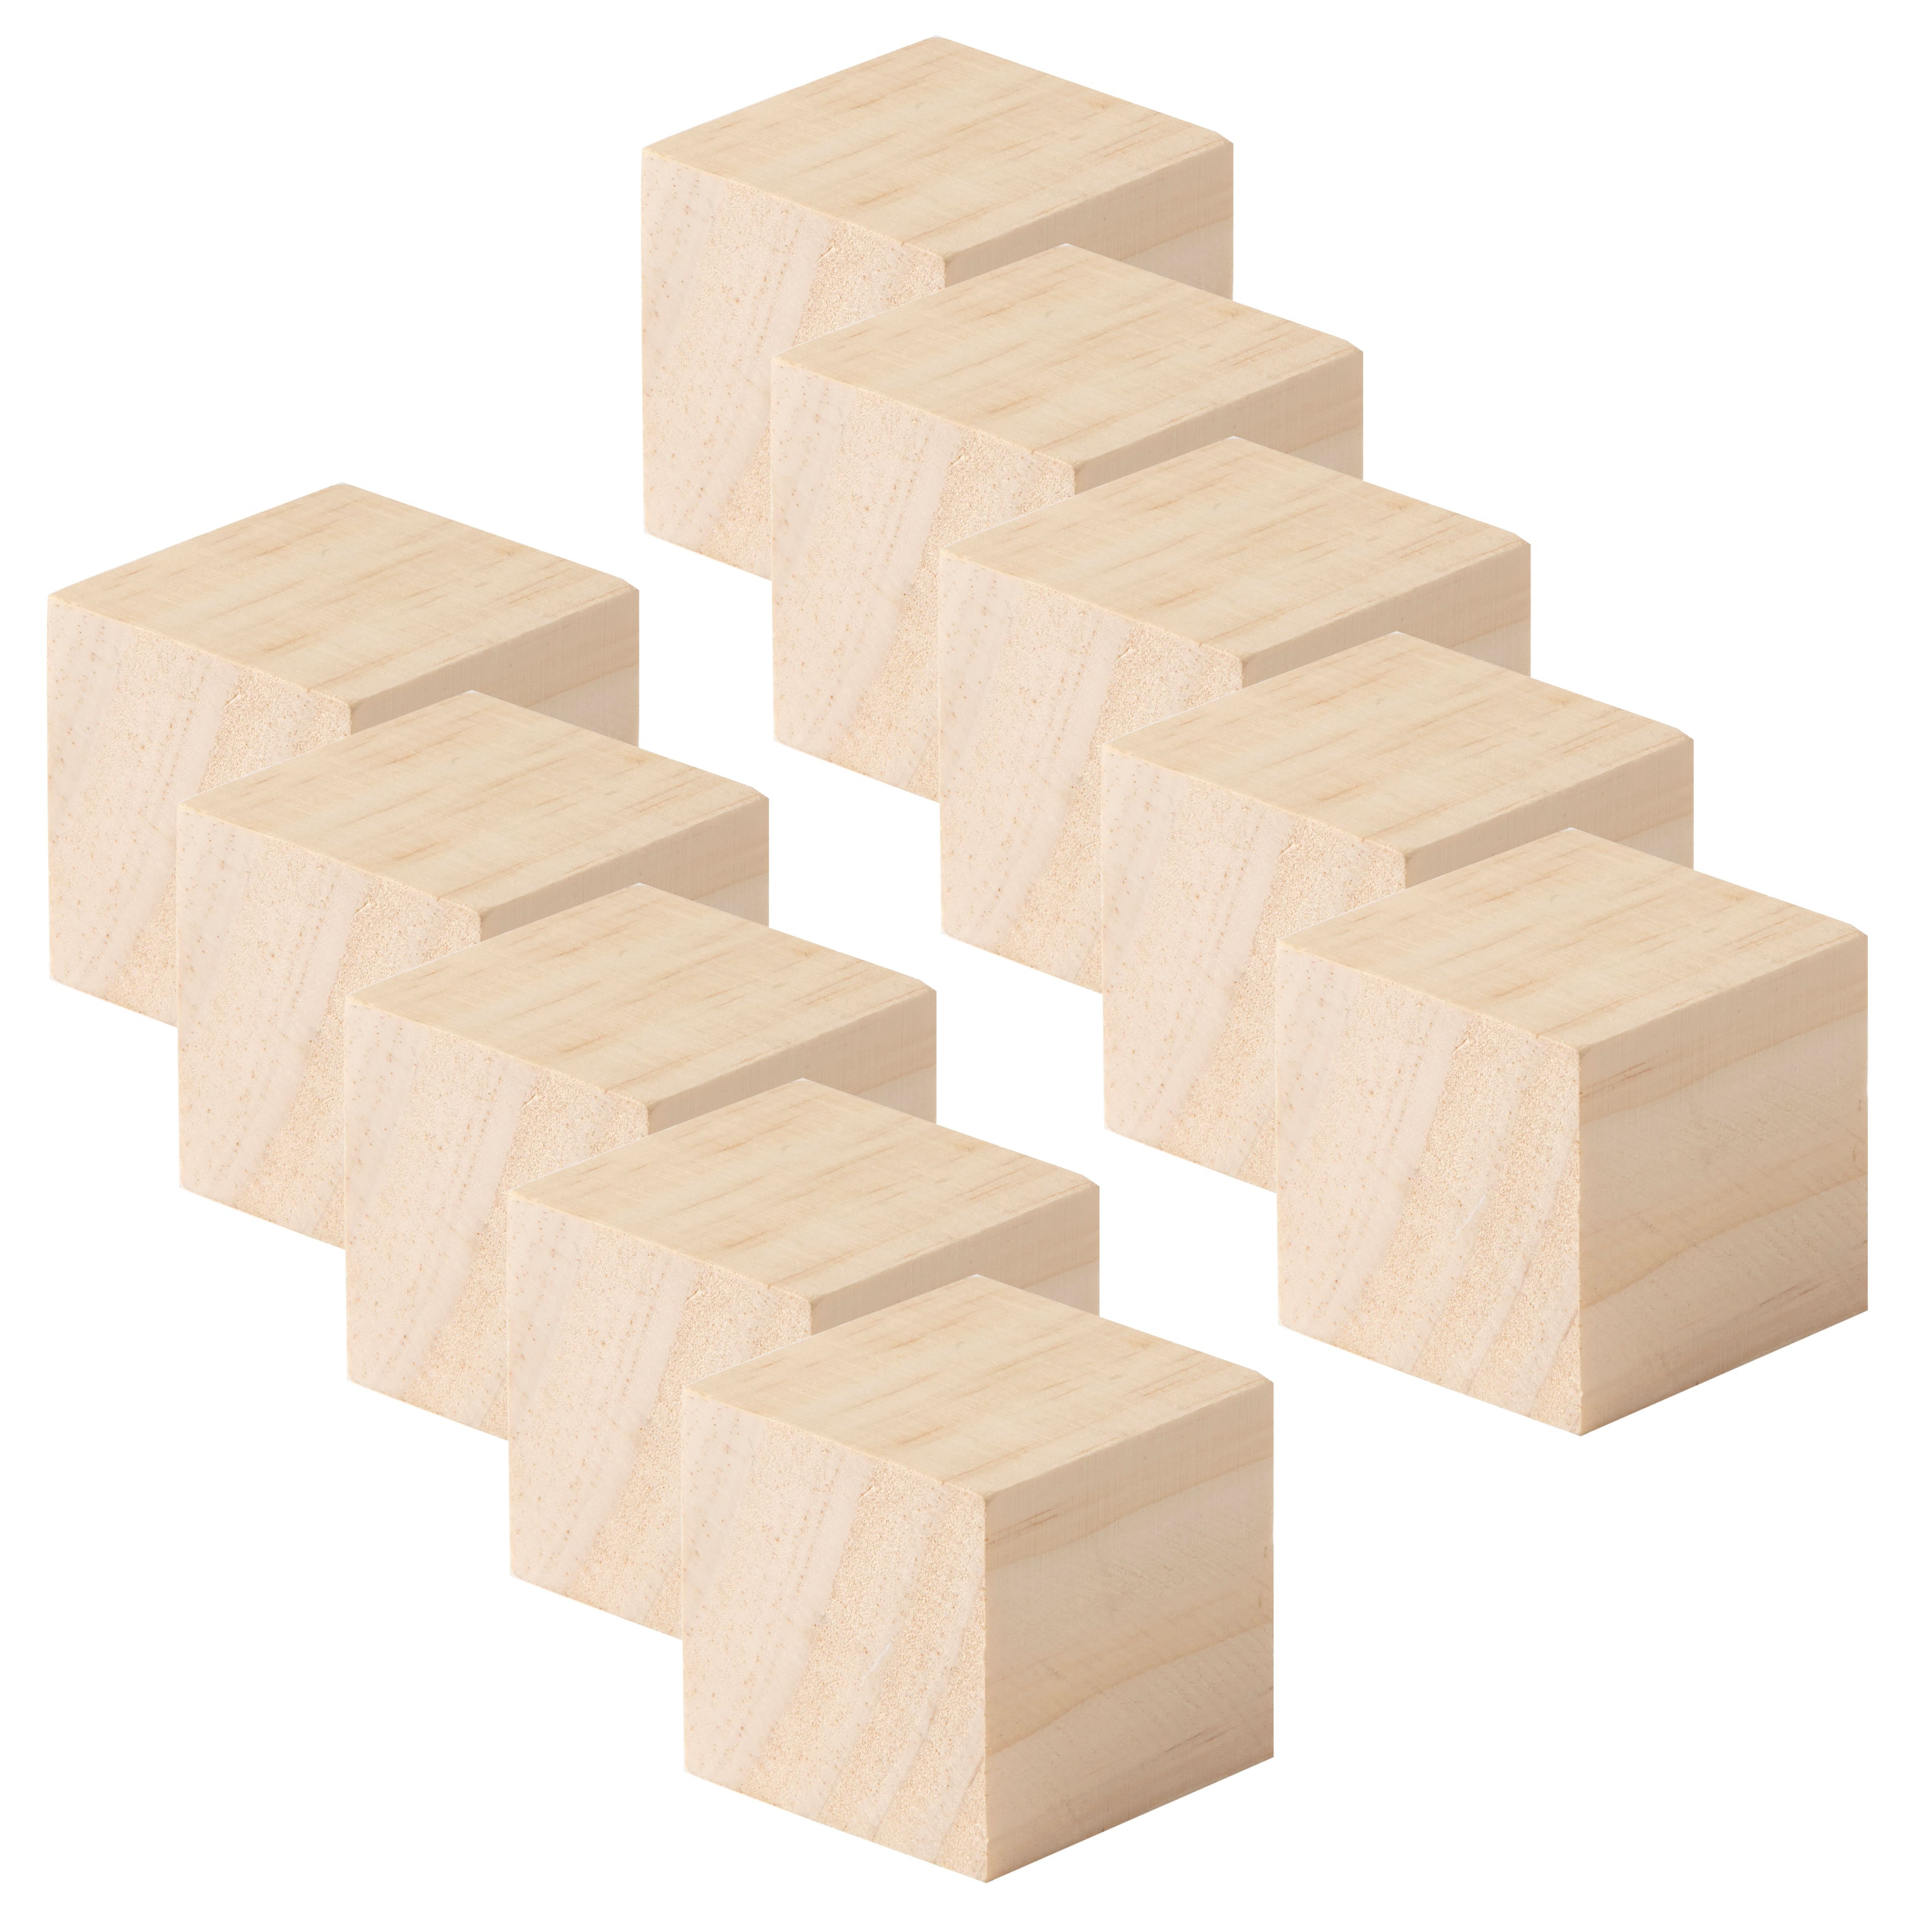 1 Square Wood Blocks by Make Market®